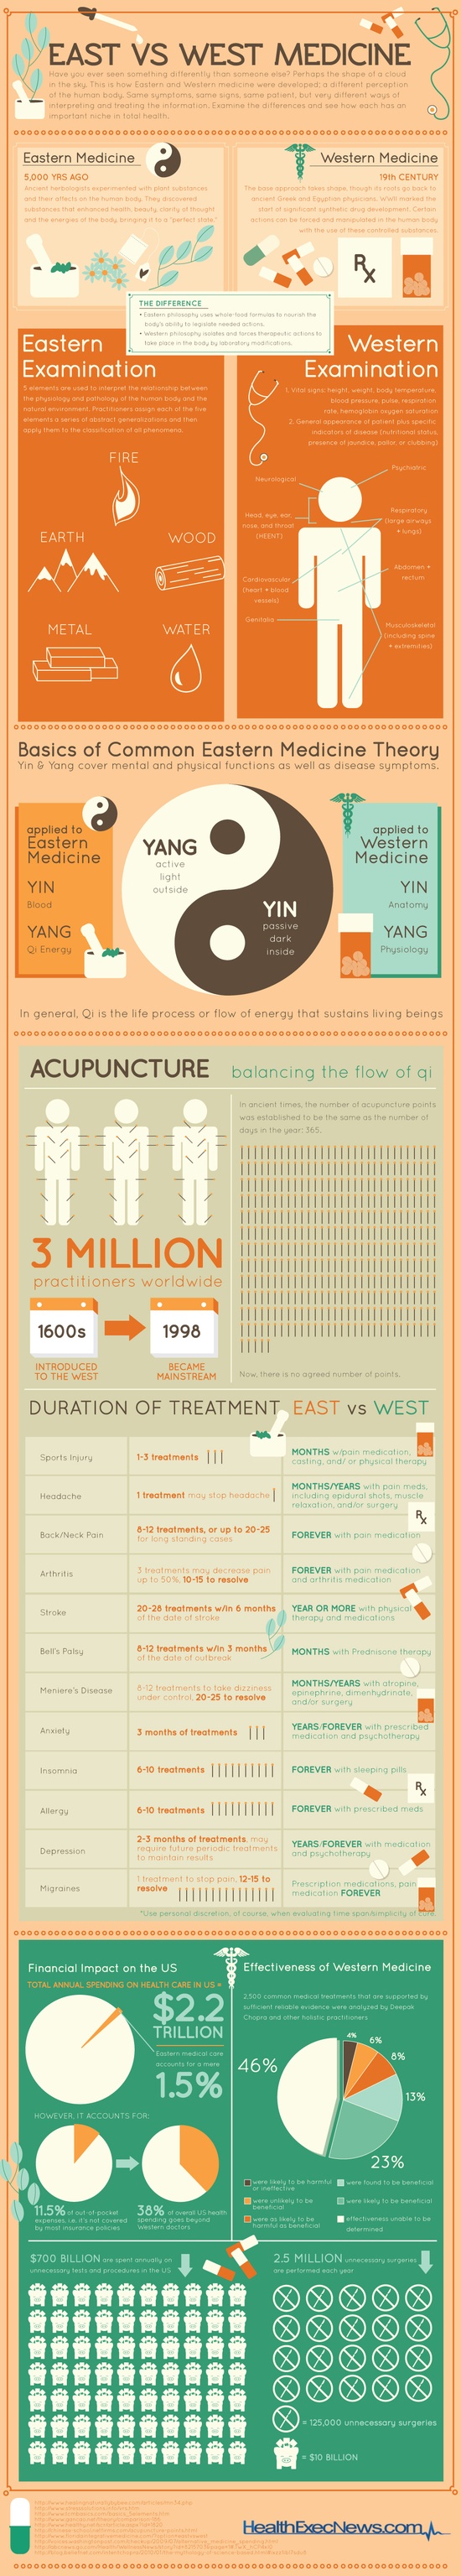 InfoGraphic on East vs West Medicine